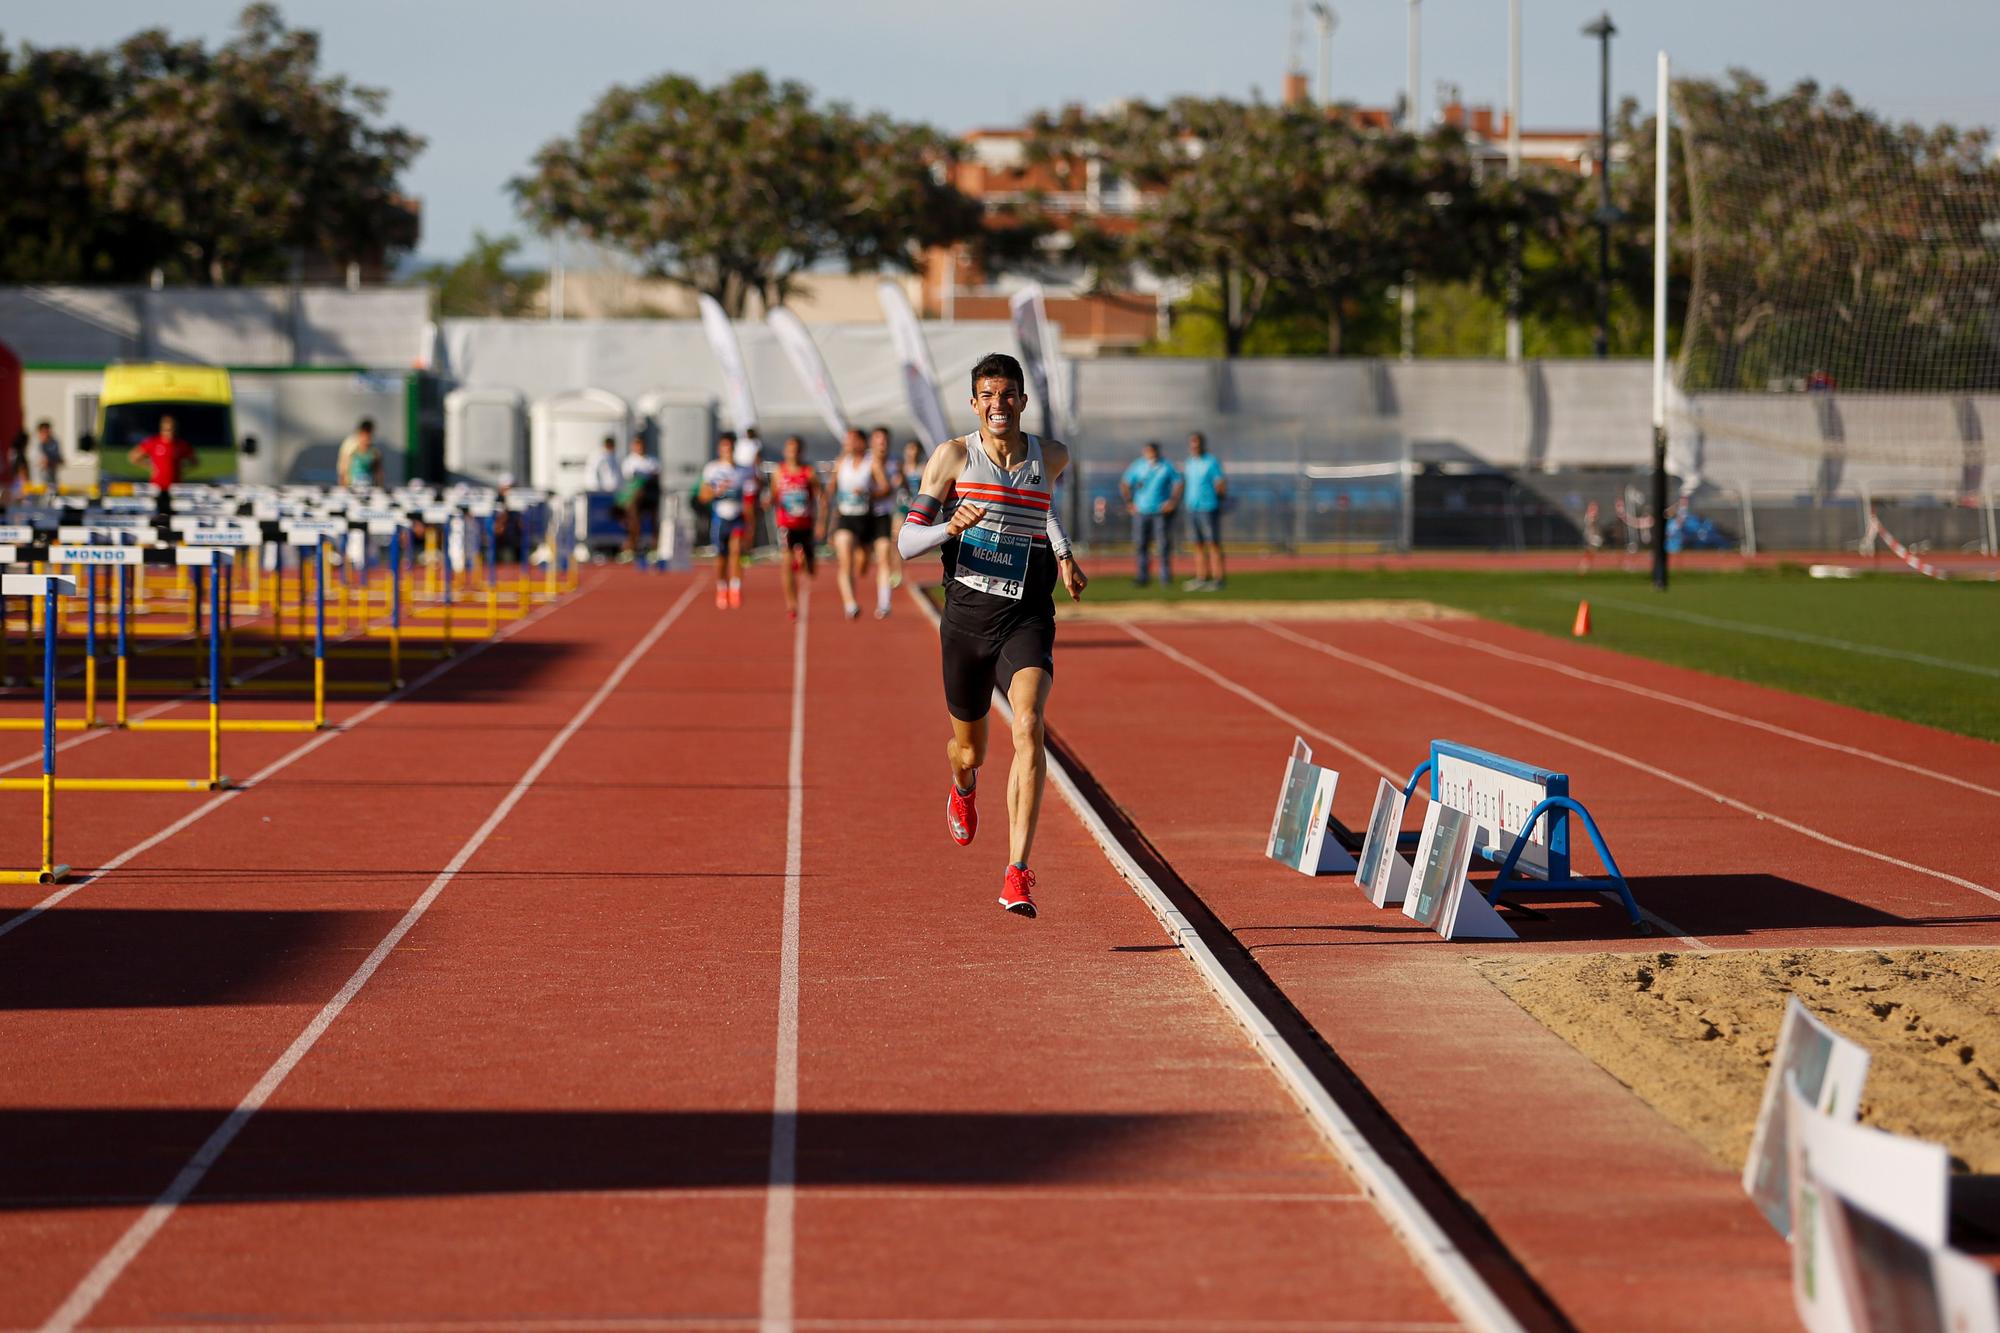 Las mejores imágenes del Meeting de Ibiza 'Toni Bonet' de atletismo